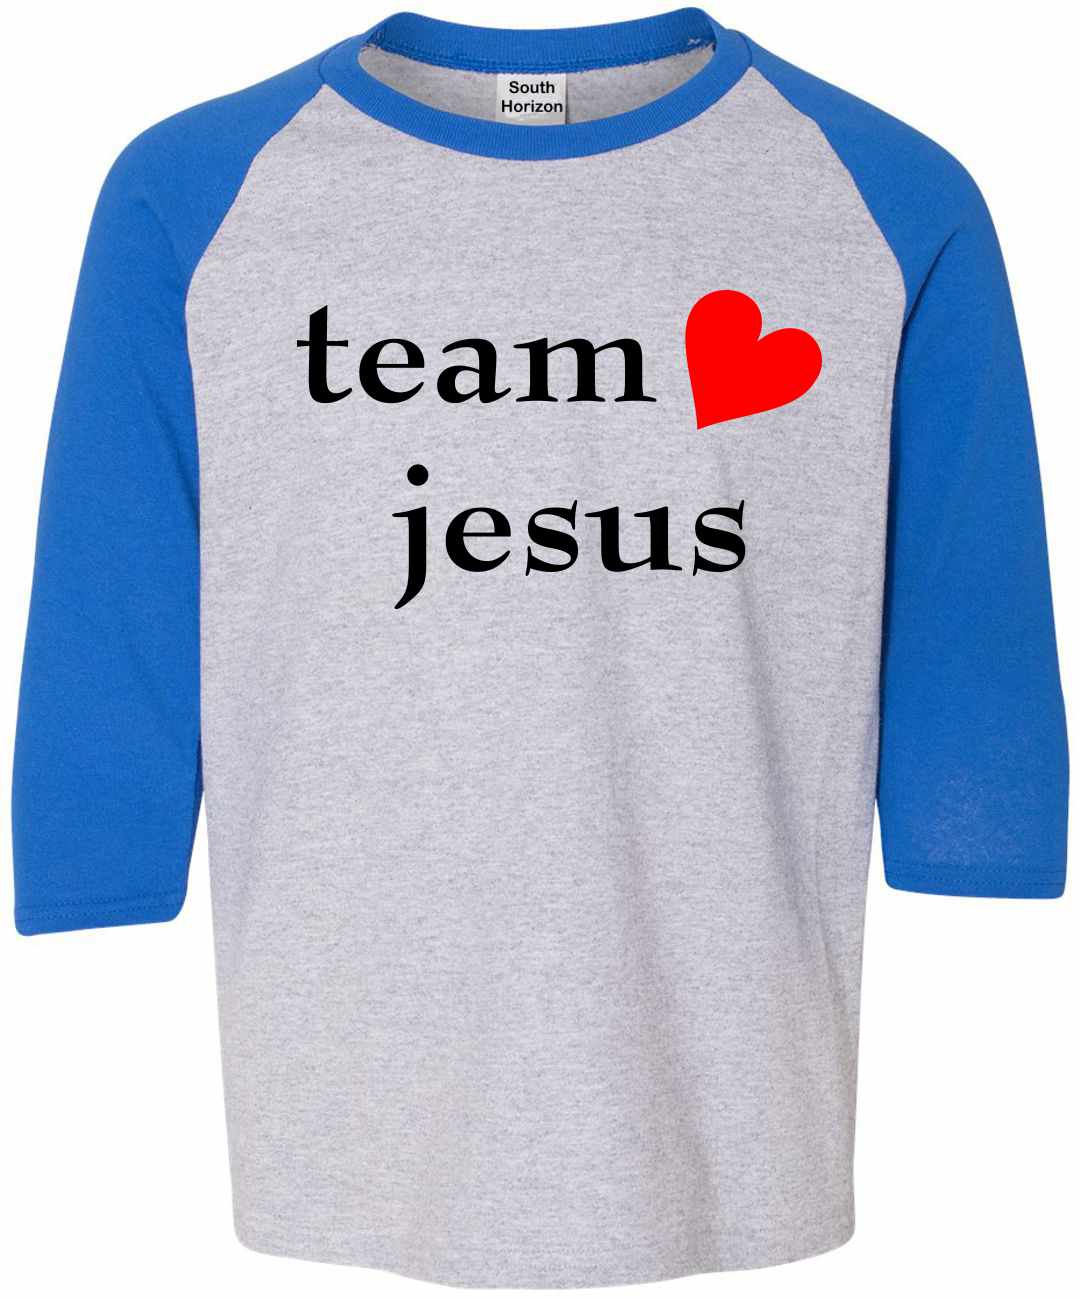 Team Jesus (heart) on Youth Baseball Shirt (#1163-212)